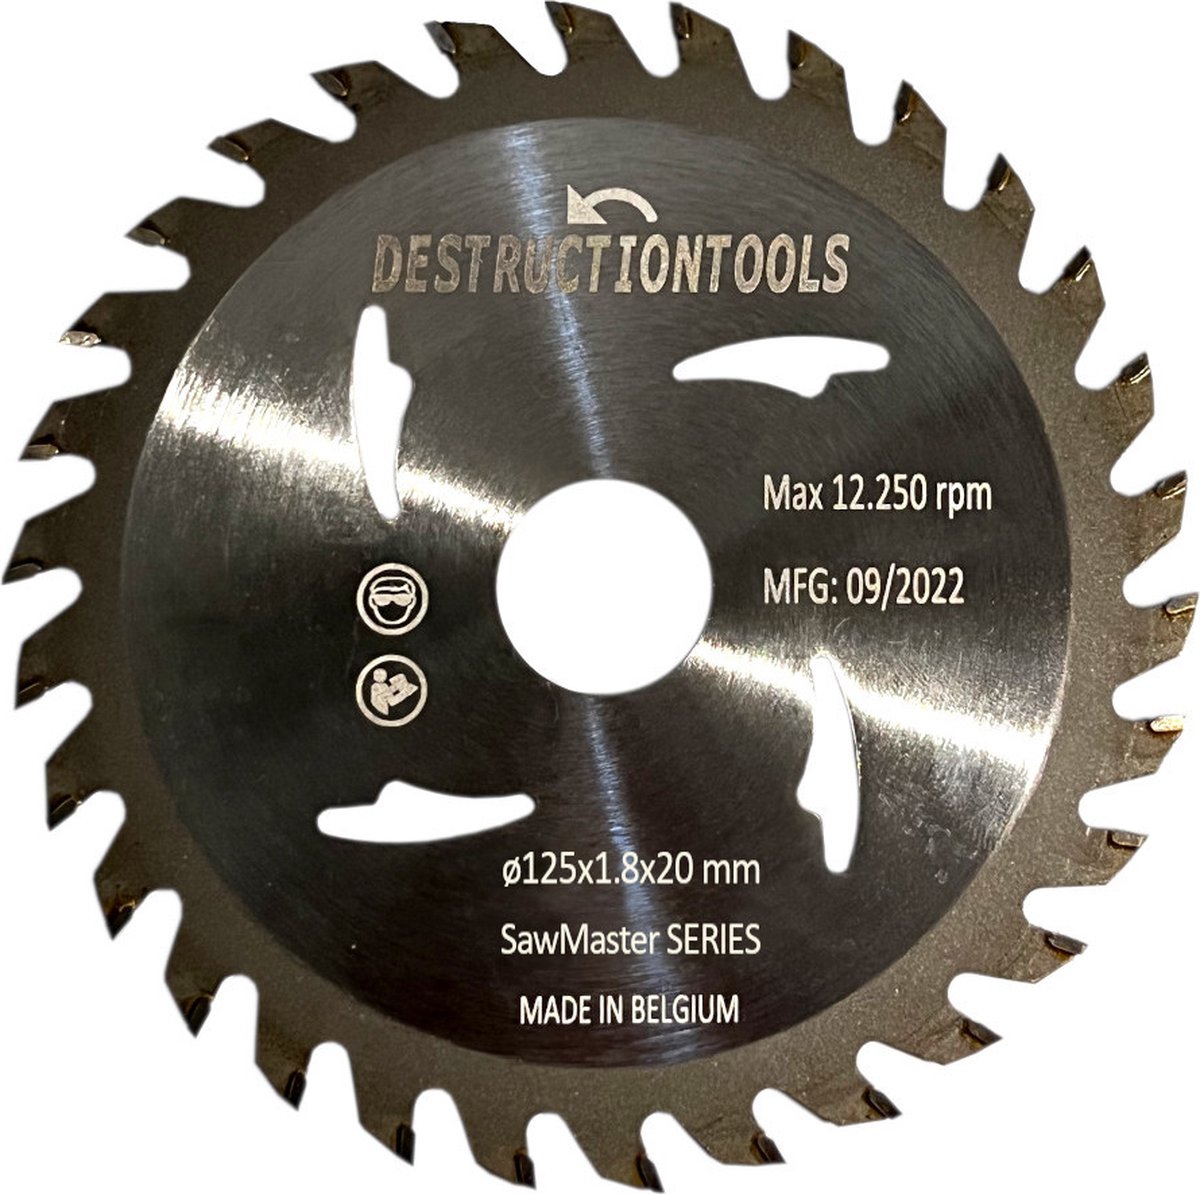 Destructiontools tct cirkelzaagblad 125mm - hout - D125mm, asgat 20mm - SawMaster series